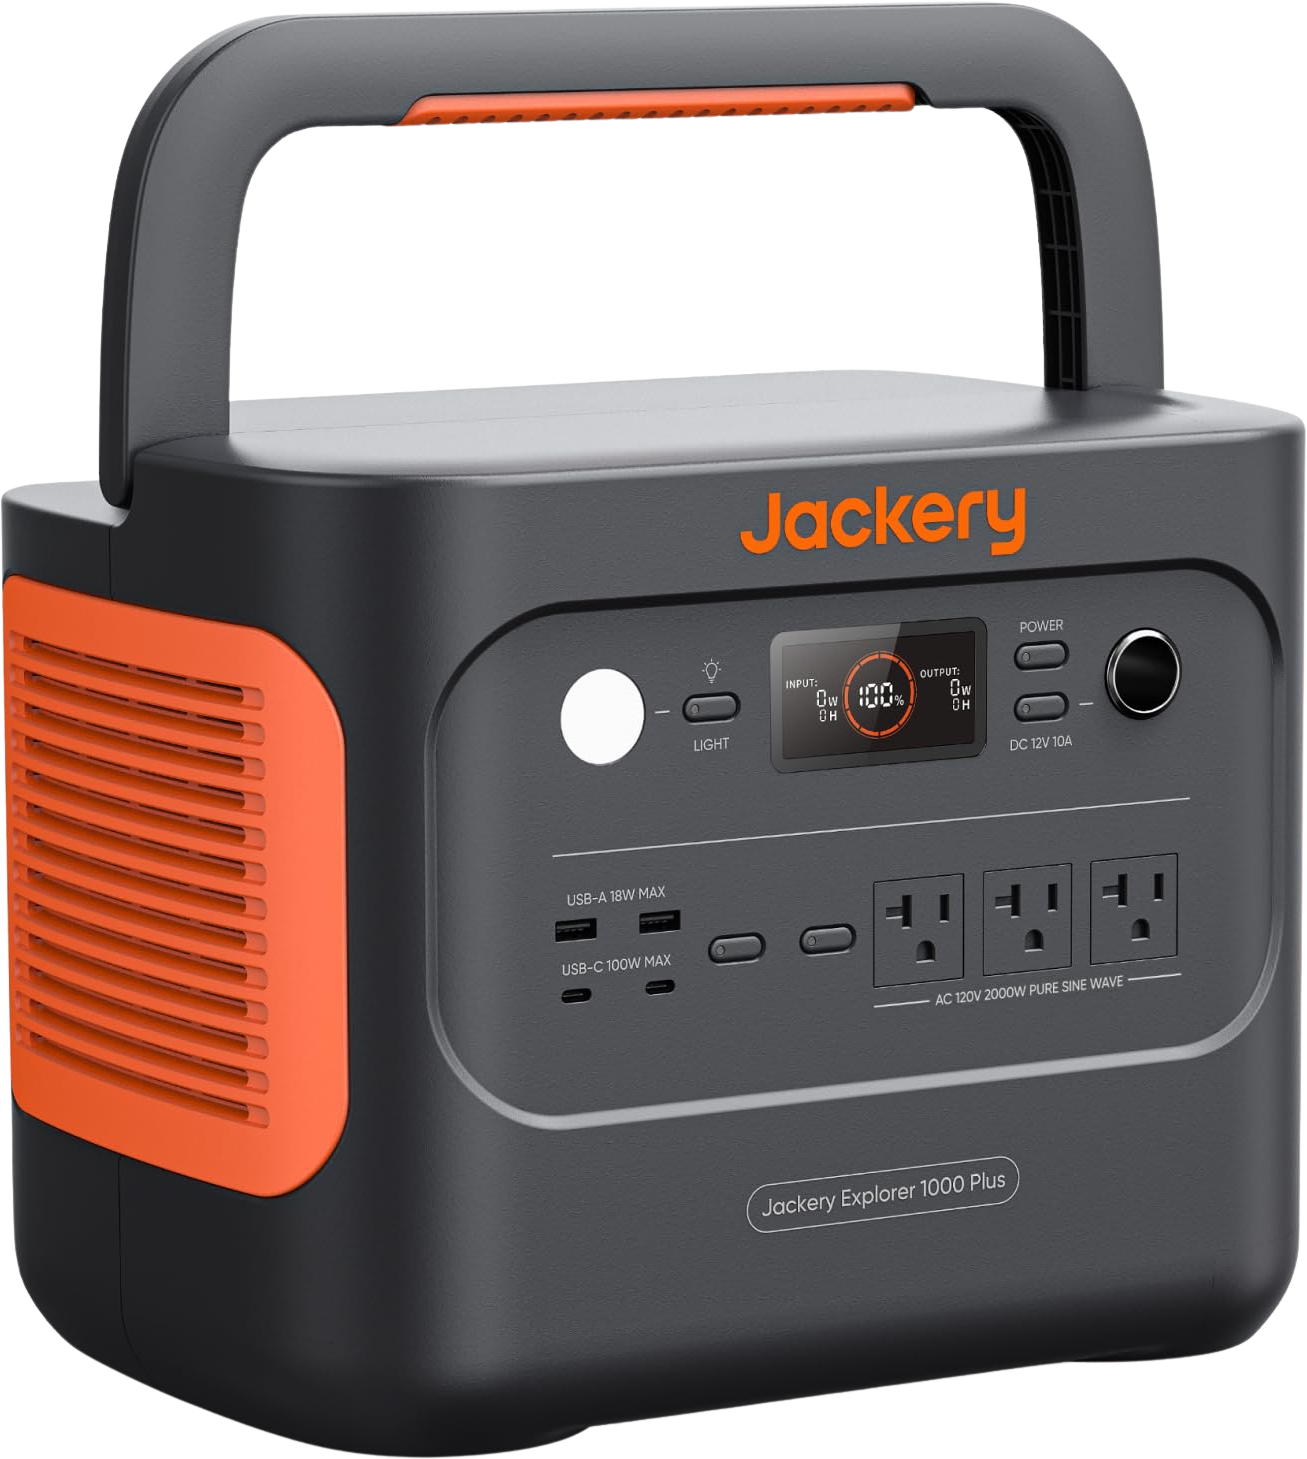 Jackery Explorer 1000 Plus Review: Expandable power on the move